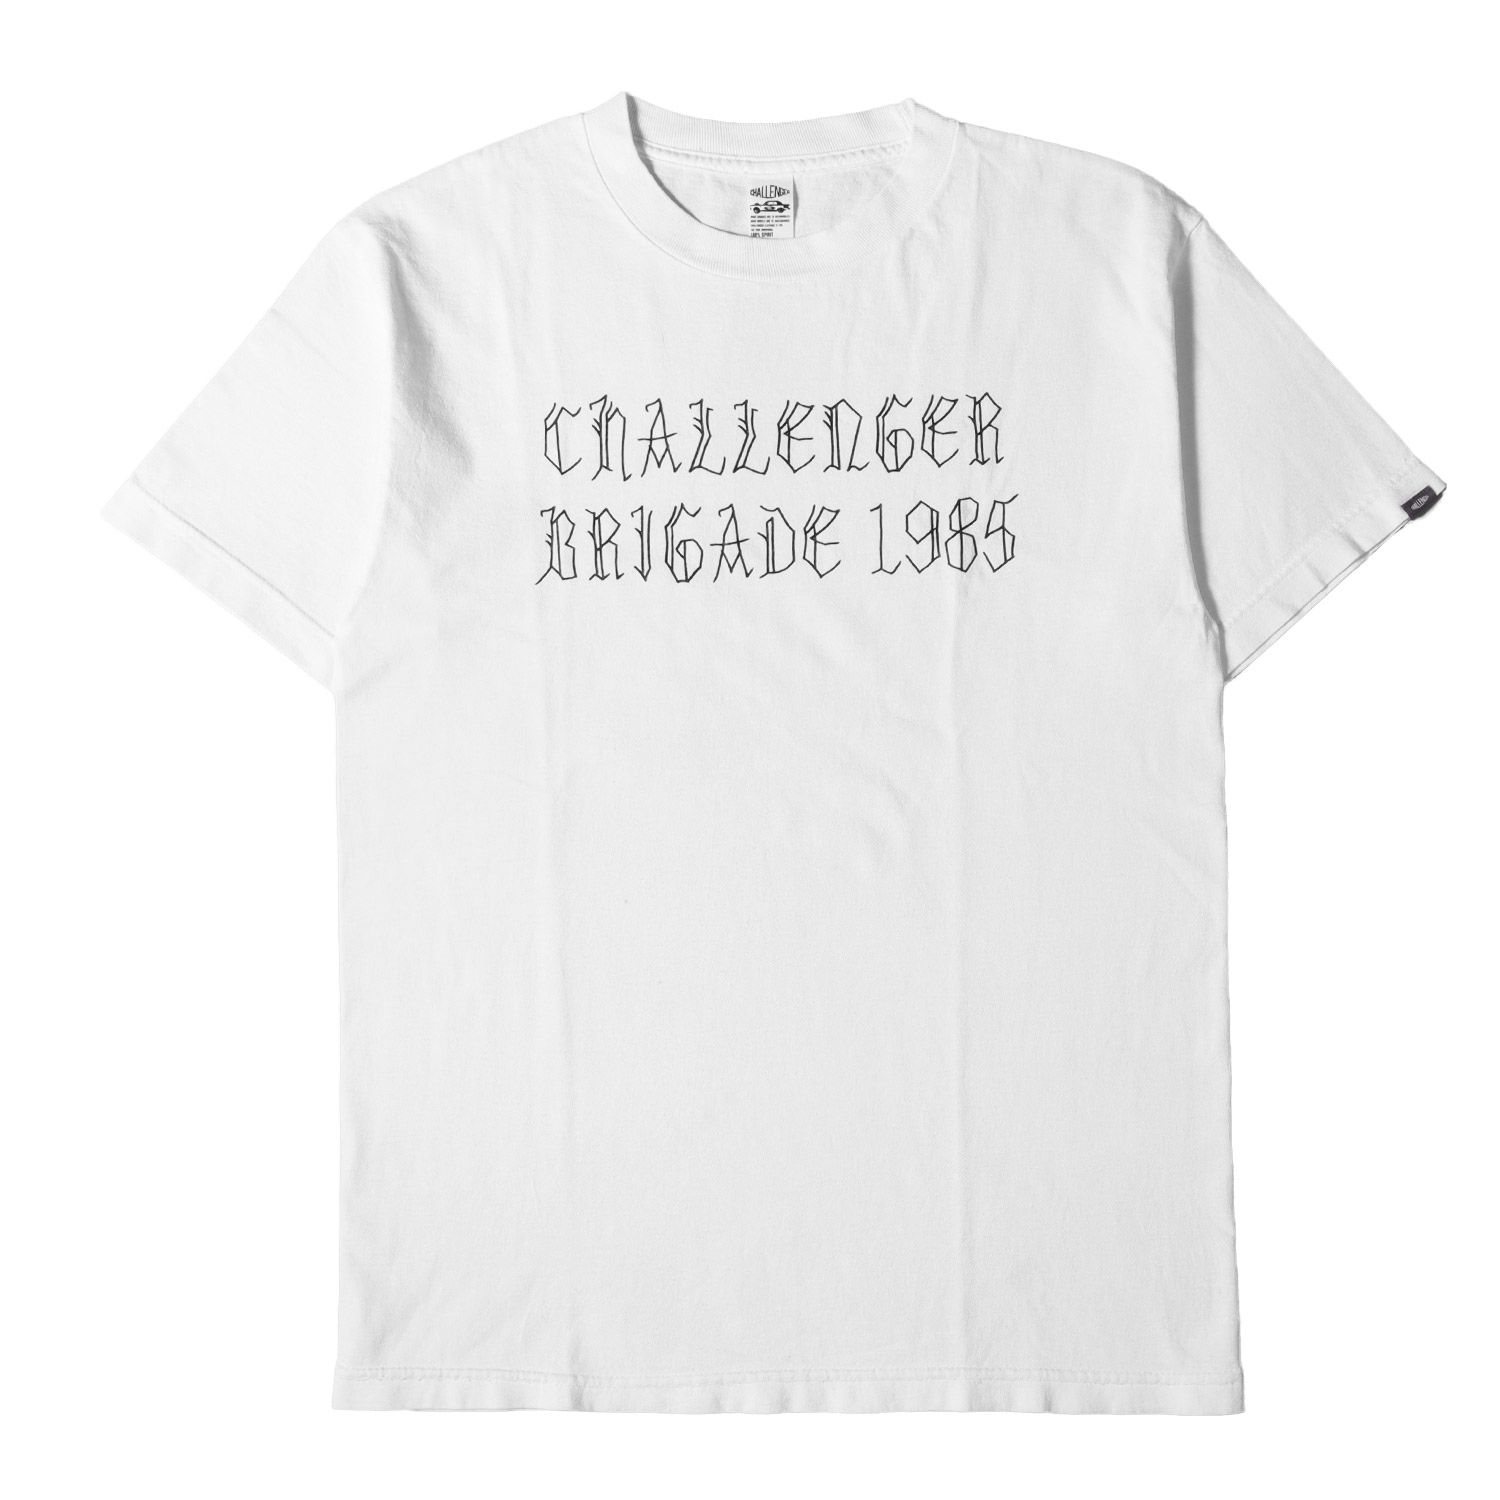 CHALLENGER チャレンジャー Tシャツ ブランドロゴ グラフィック クルーネックTシャツ ホワイト 白 M トップス カットソー 半袖  カジュアル ブランド ストリート 着回し